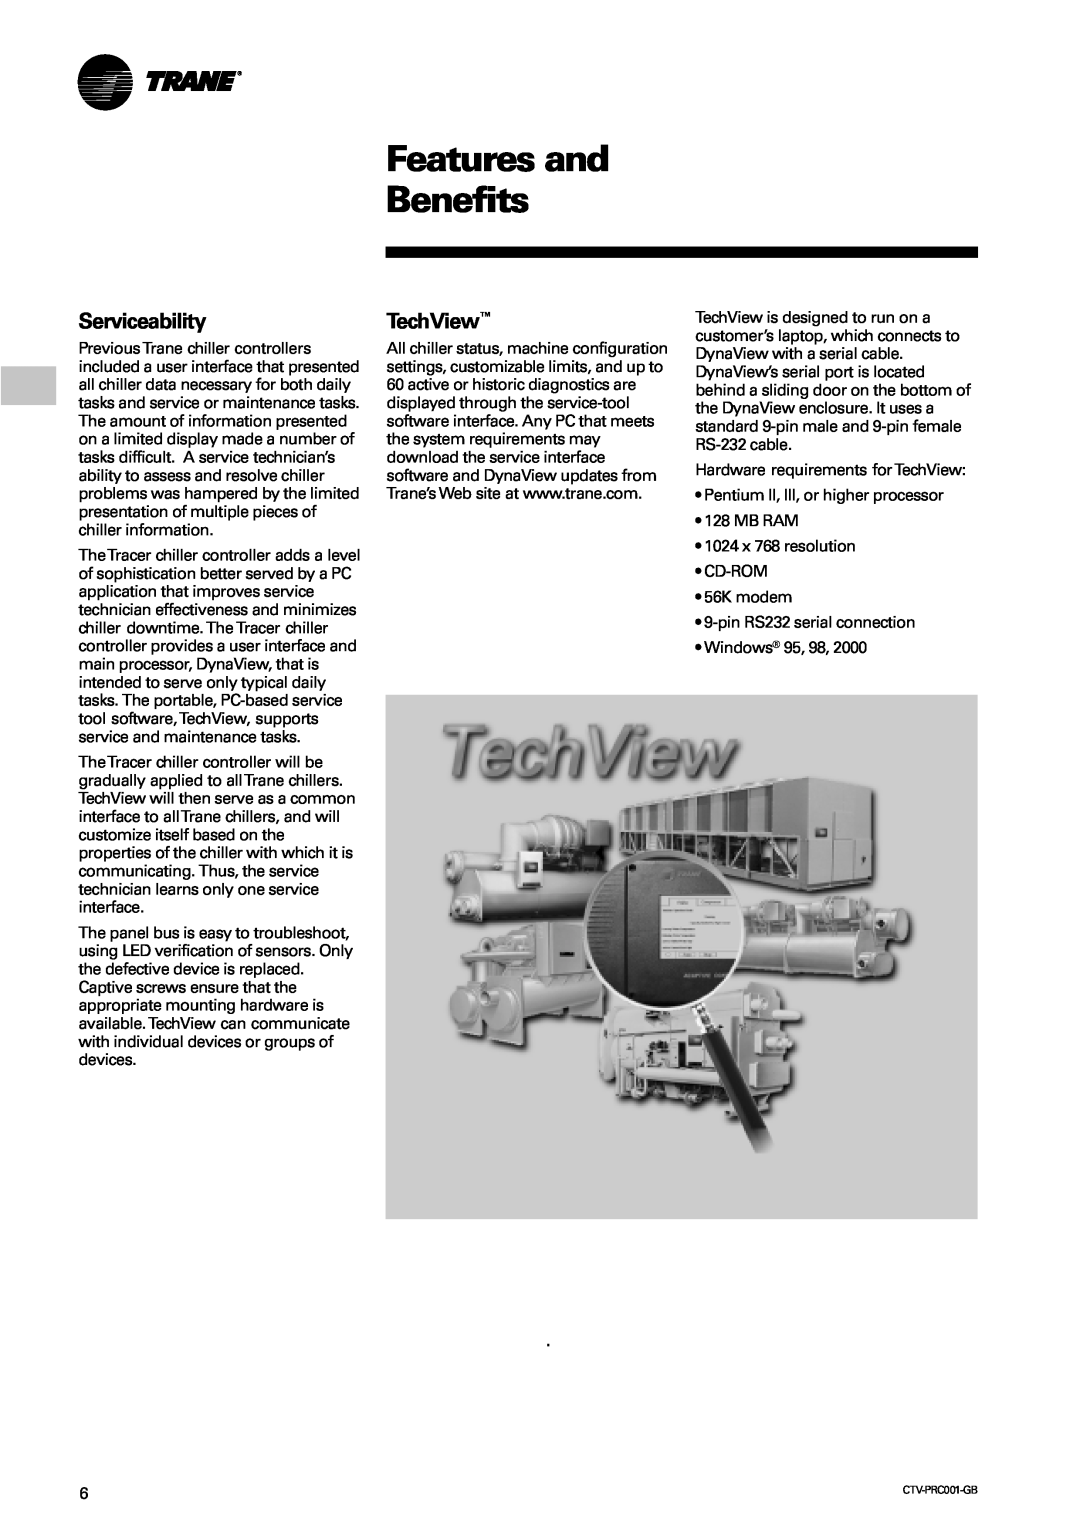 Trane CVGF manual Serviceability, TechView, Features and Benefits 